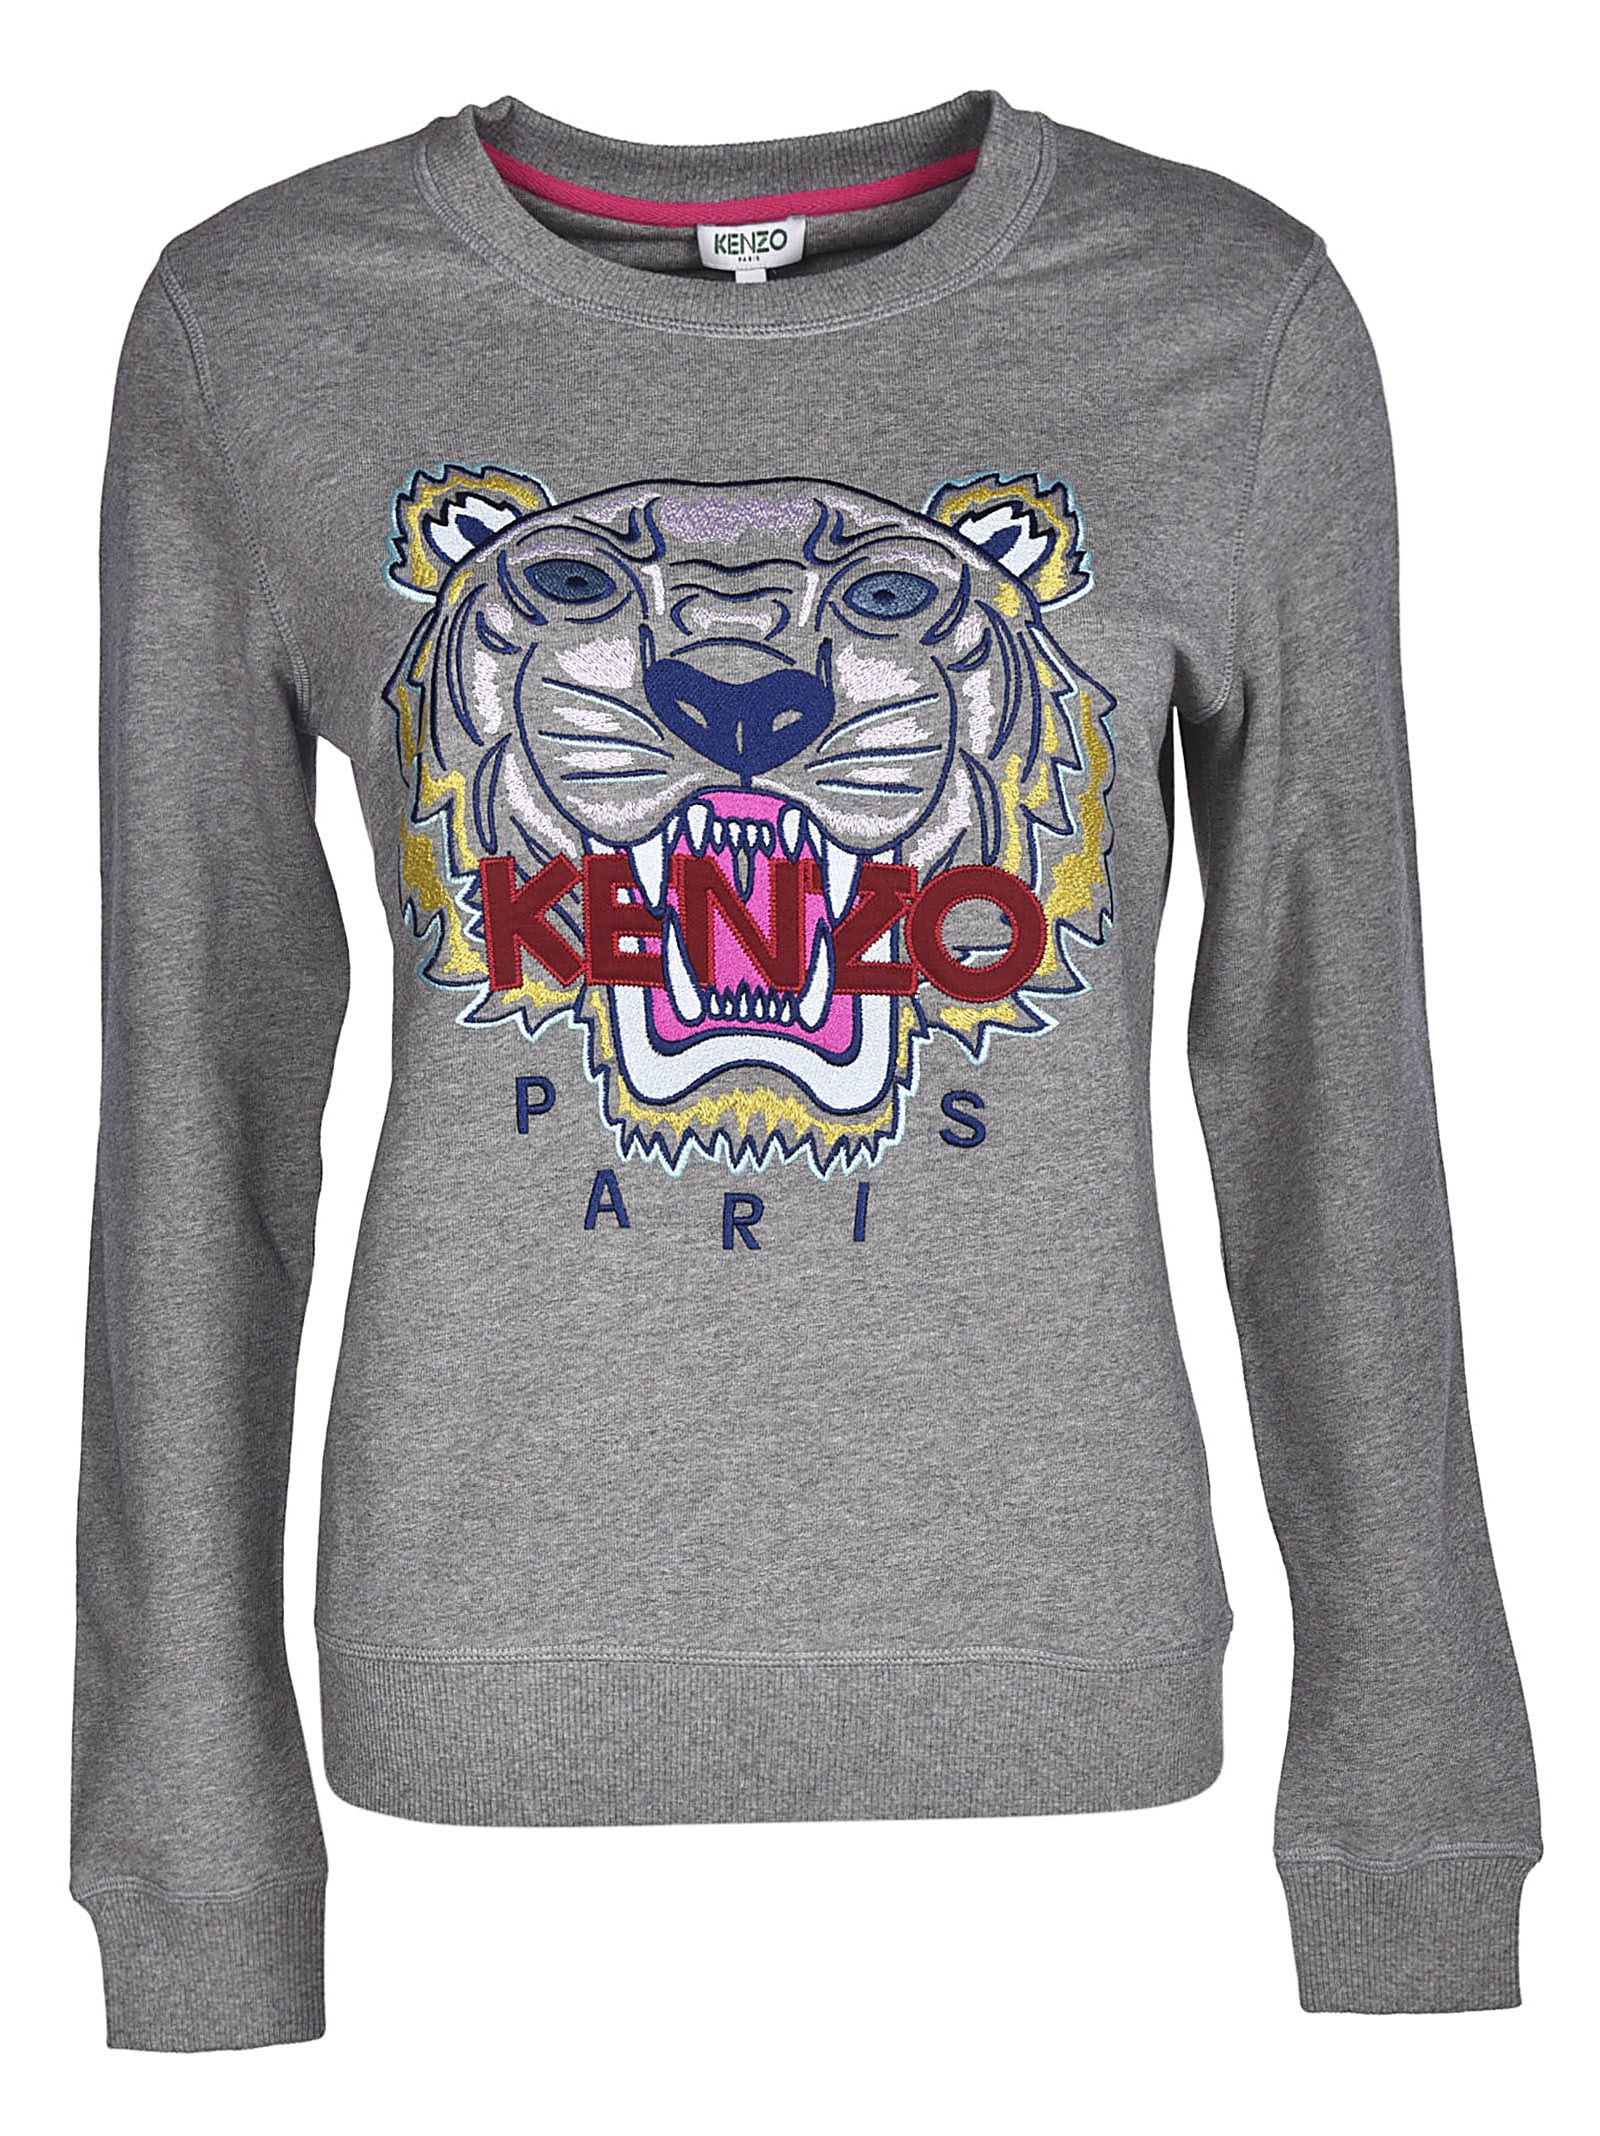 italist | Best price in the market for Kenzo Kenzo Tiger Sweatshirt